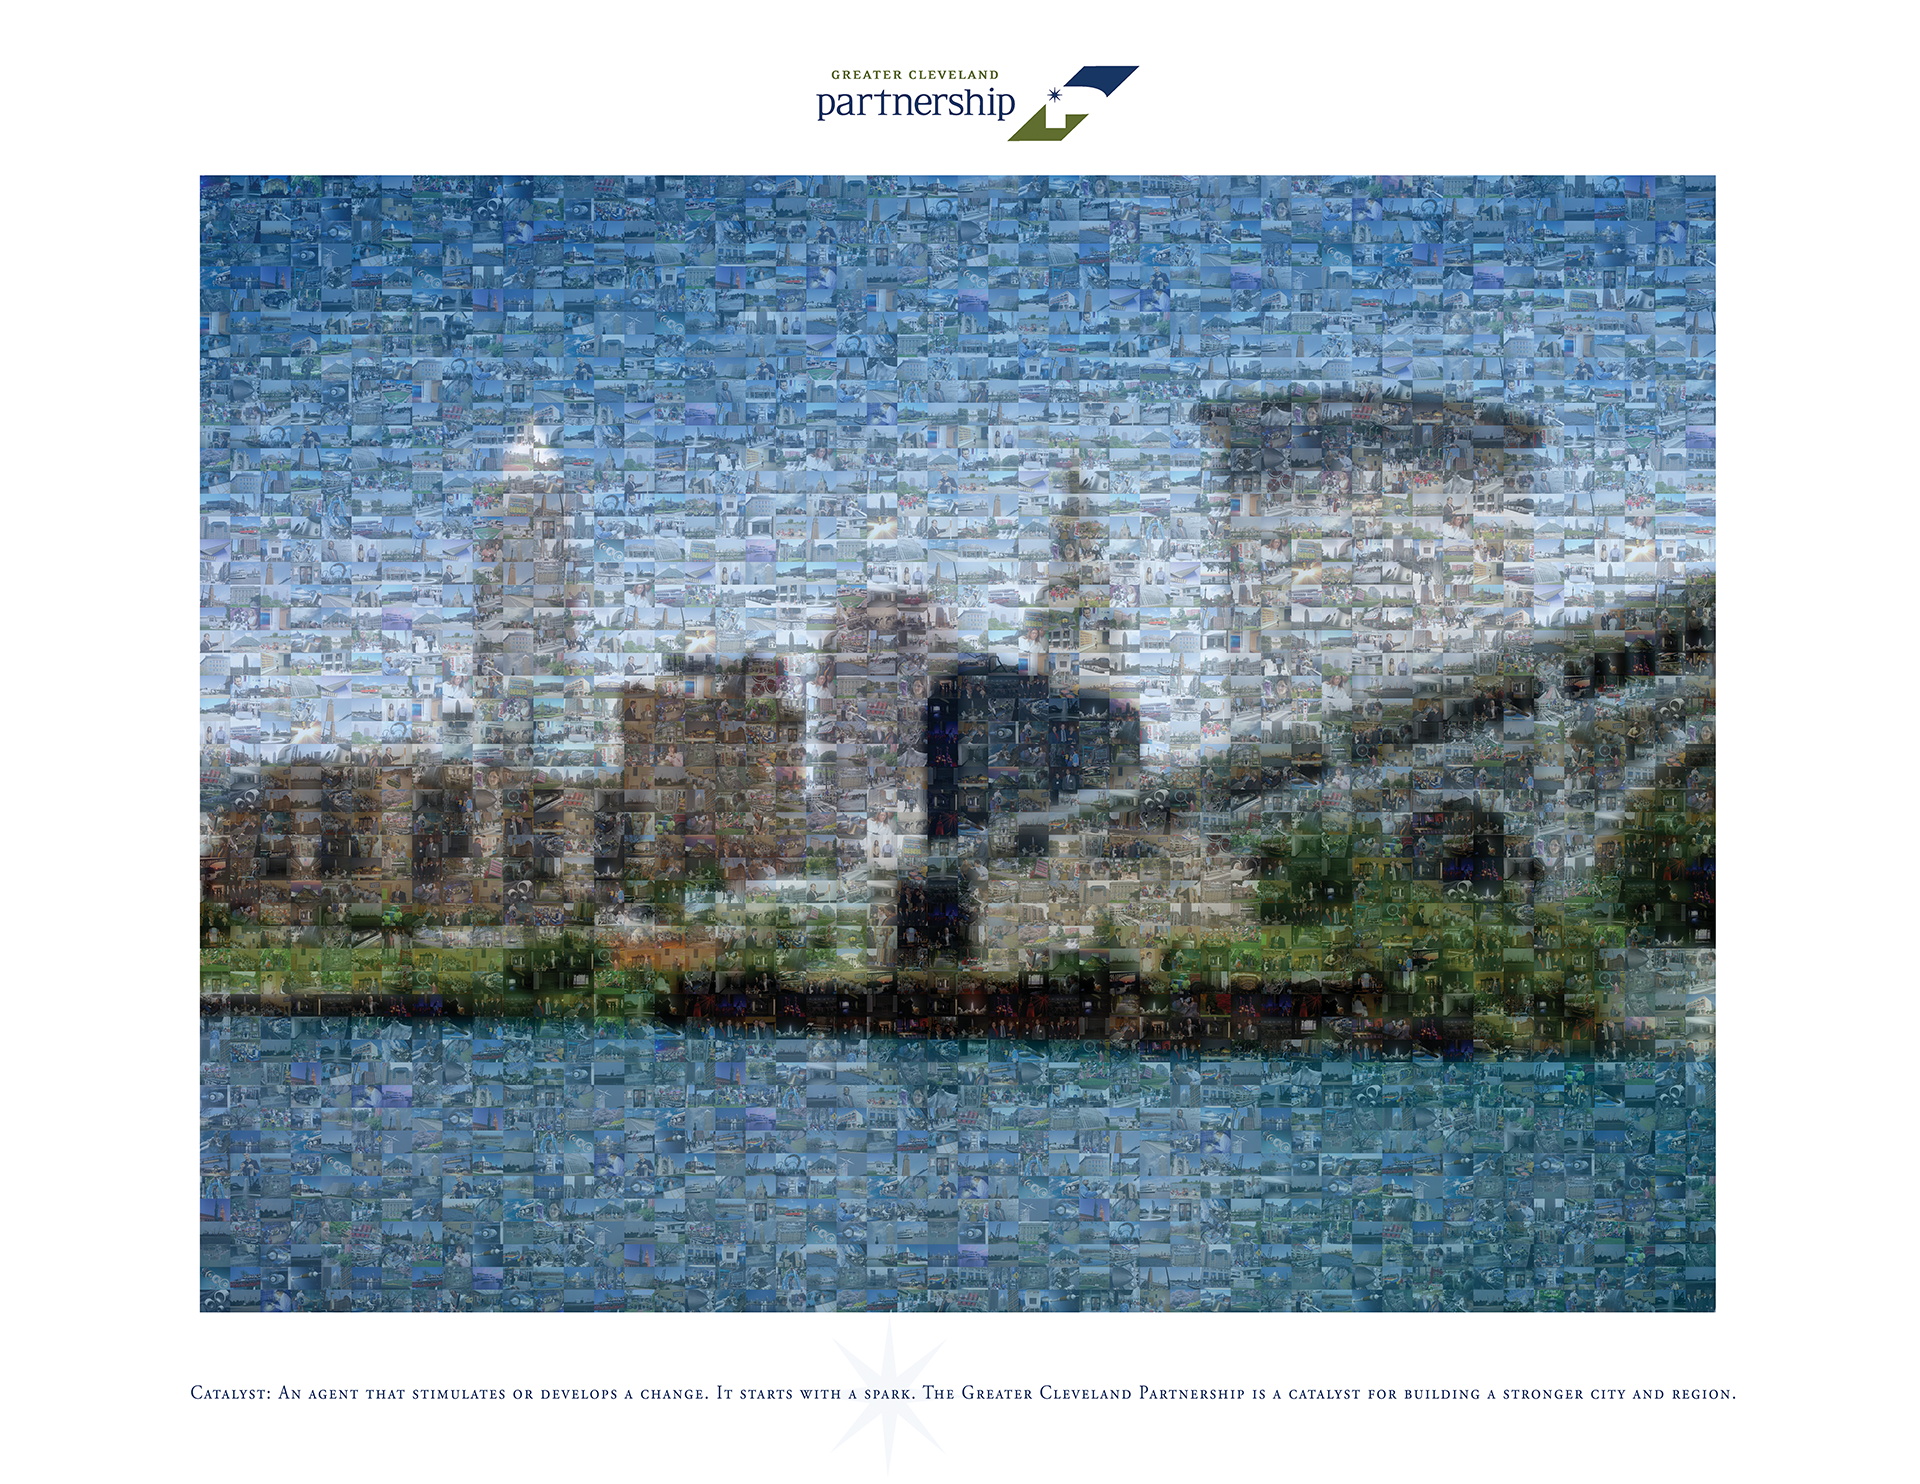 photo mosaic Greater Cleveland Partnership Corporate mosaic poster created using 430 photos of Cleveland